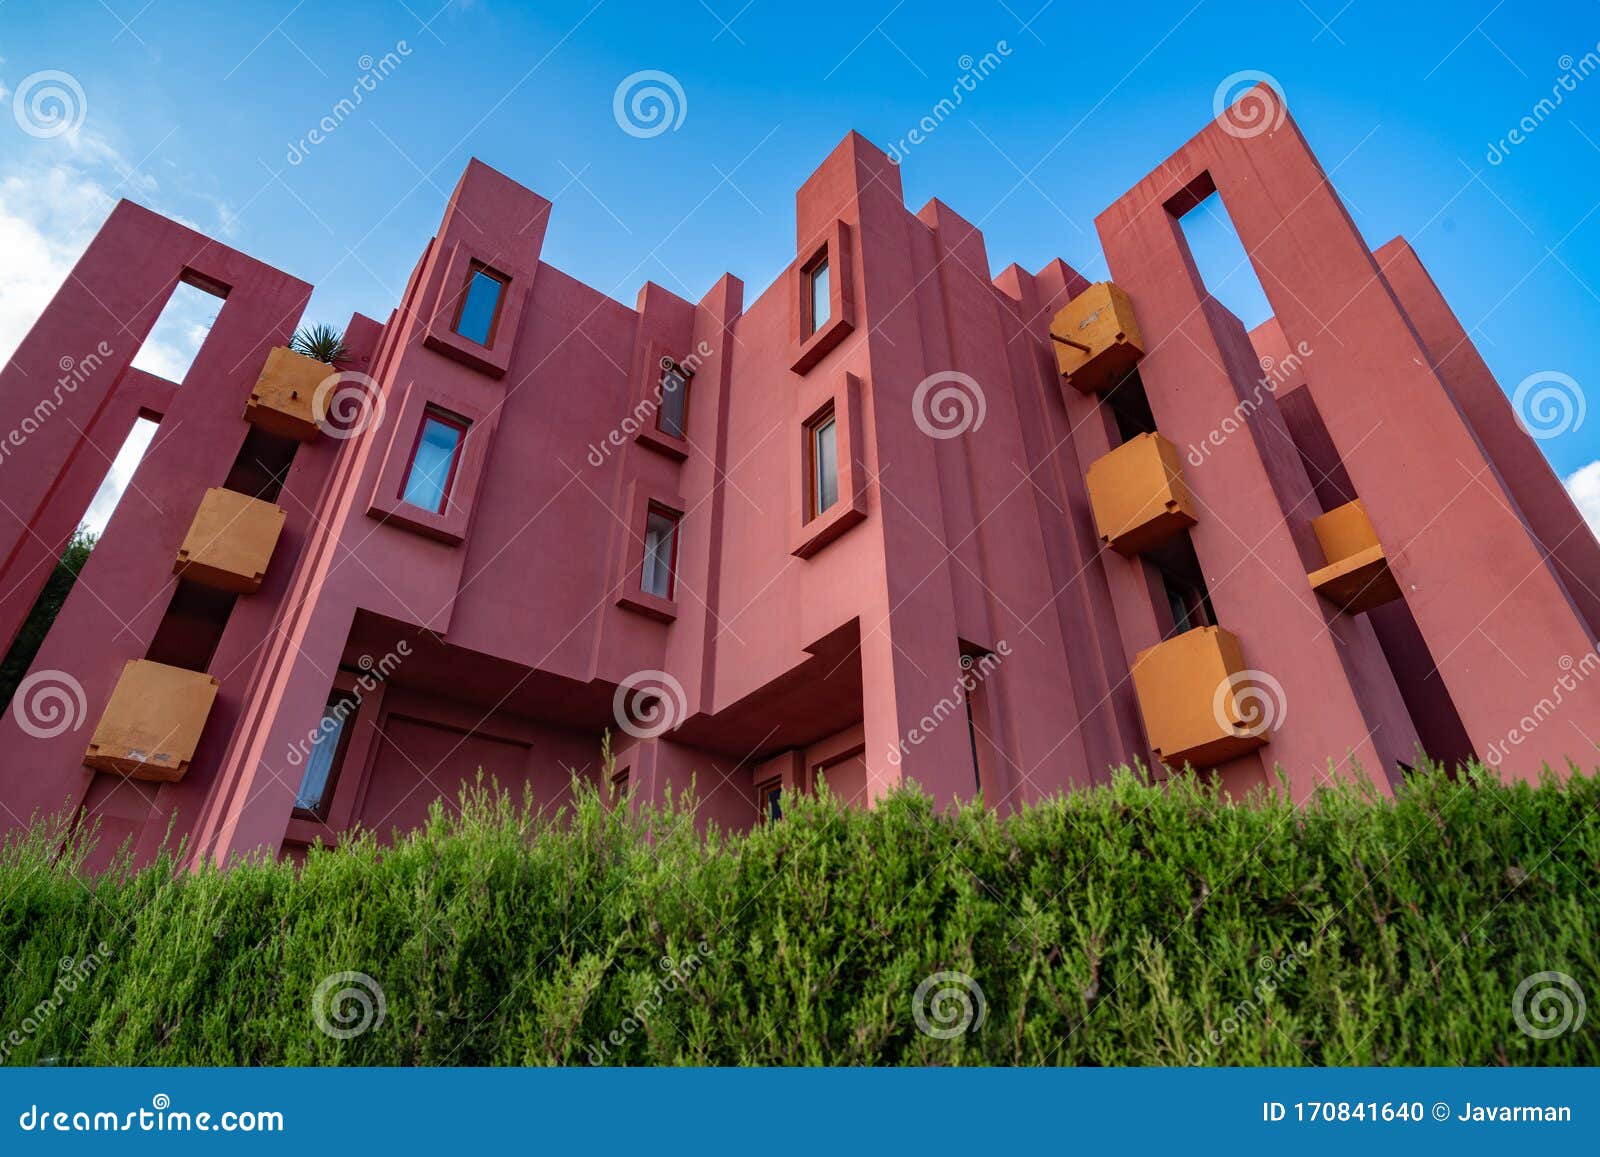 red walls of la muralla roja building in calpe, spain